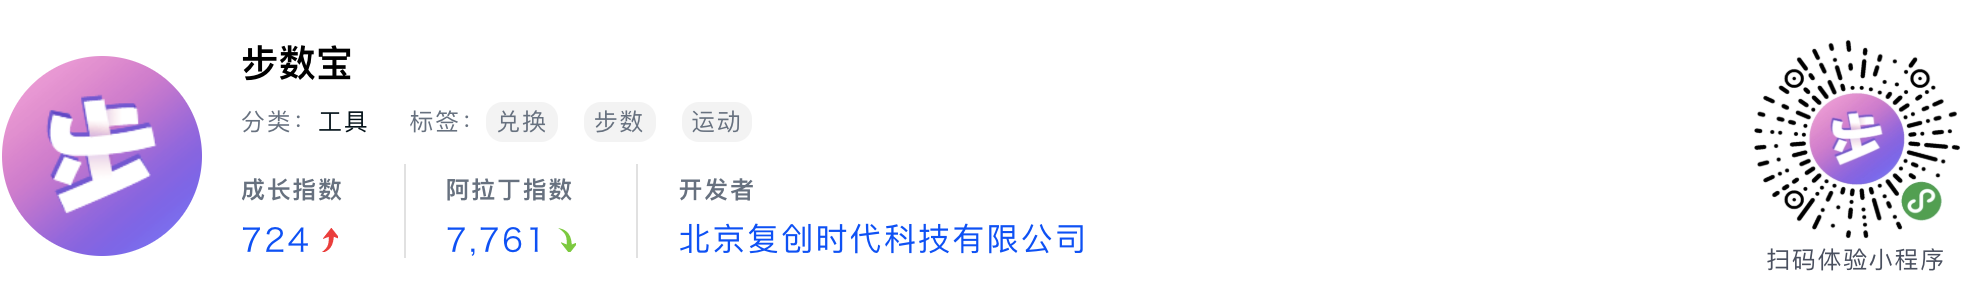 WeChatミニプログラム最新ランキングTOP20【2019年6月版】14位 ：步数宝